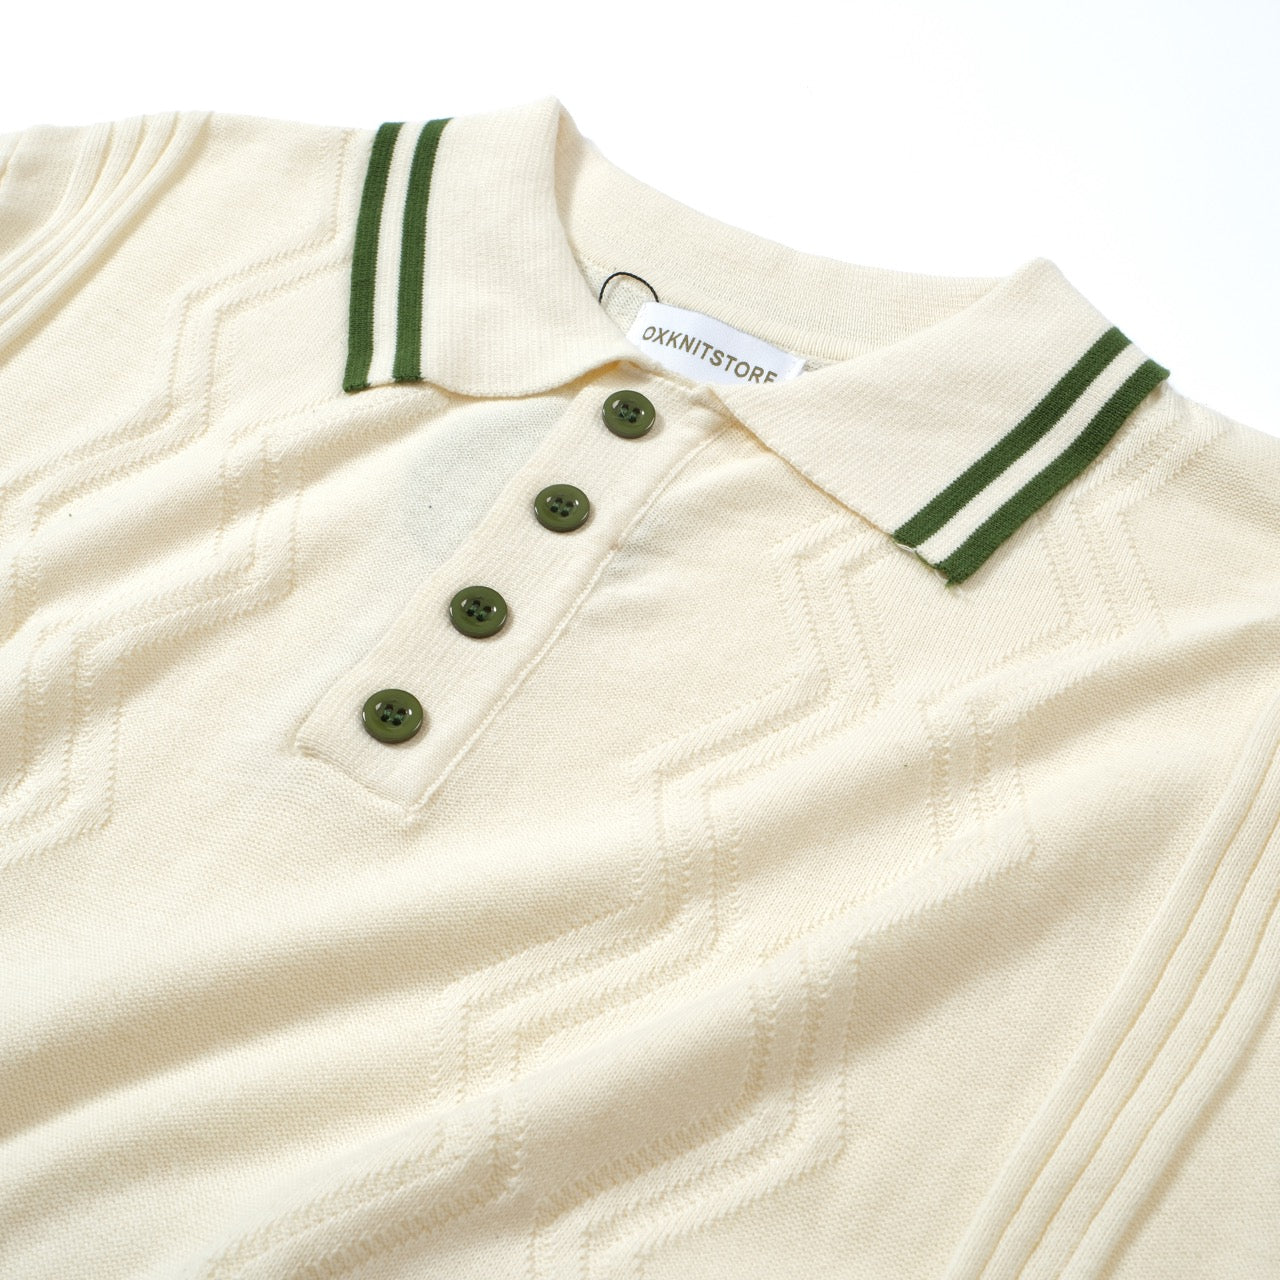 OXKNIT Men Vintage Clothing 1960s Mod Style Casual White Knit Retro Polo